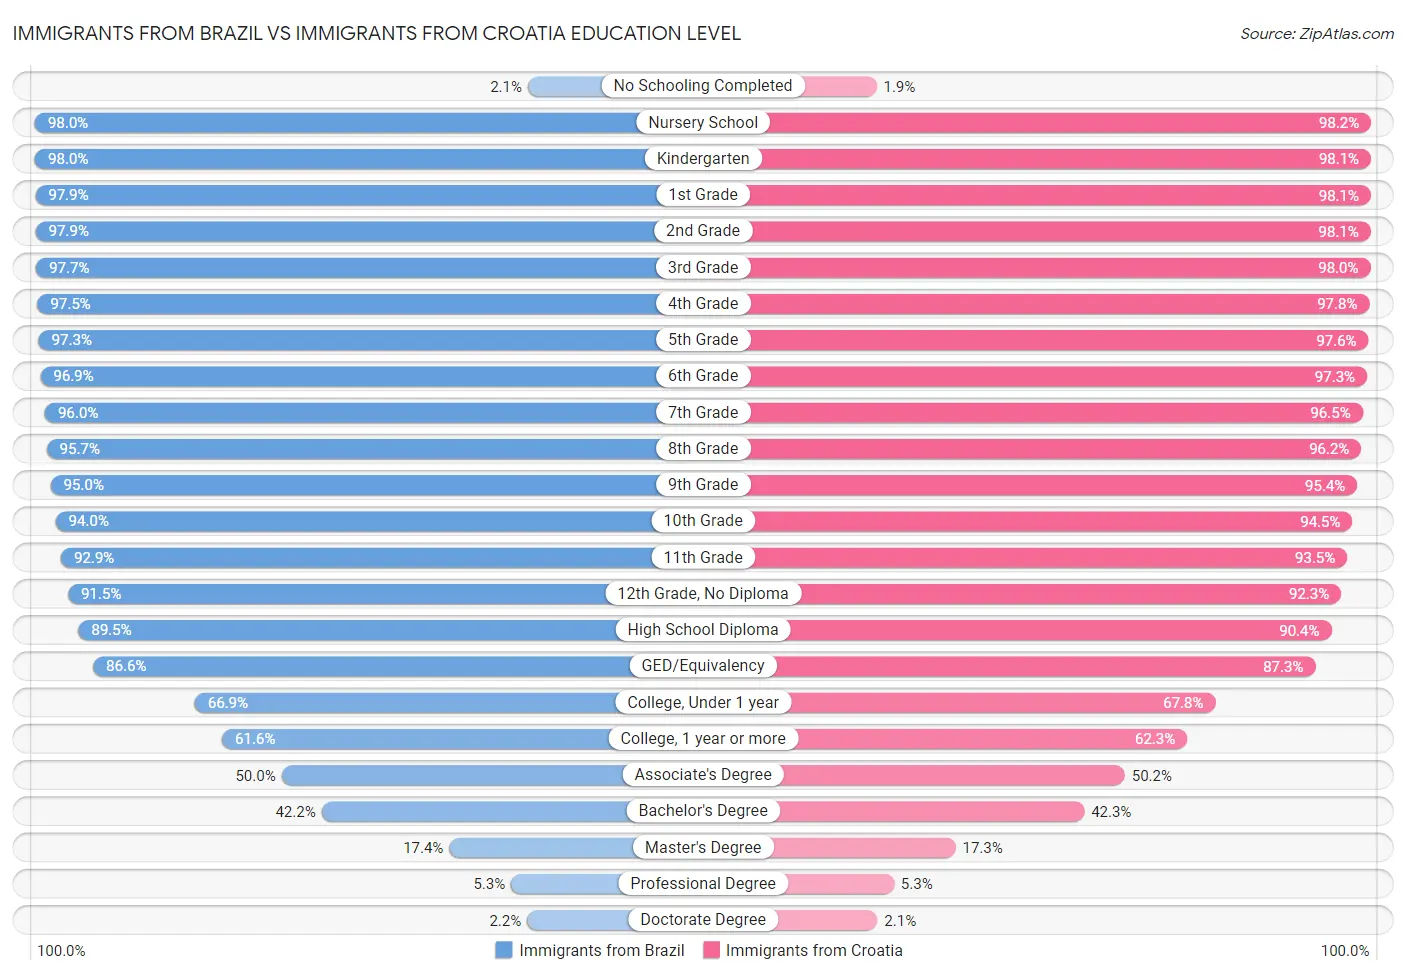 Immigrants from Brazil vs Immigrants from Croatia Education Level